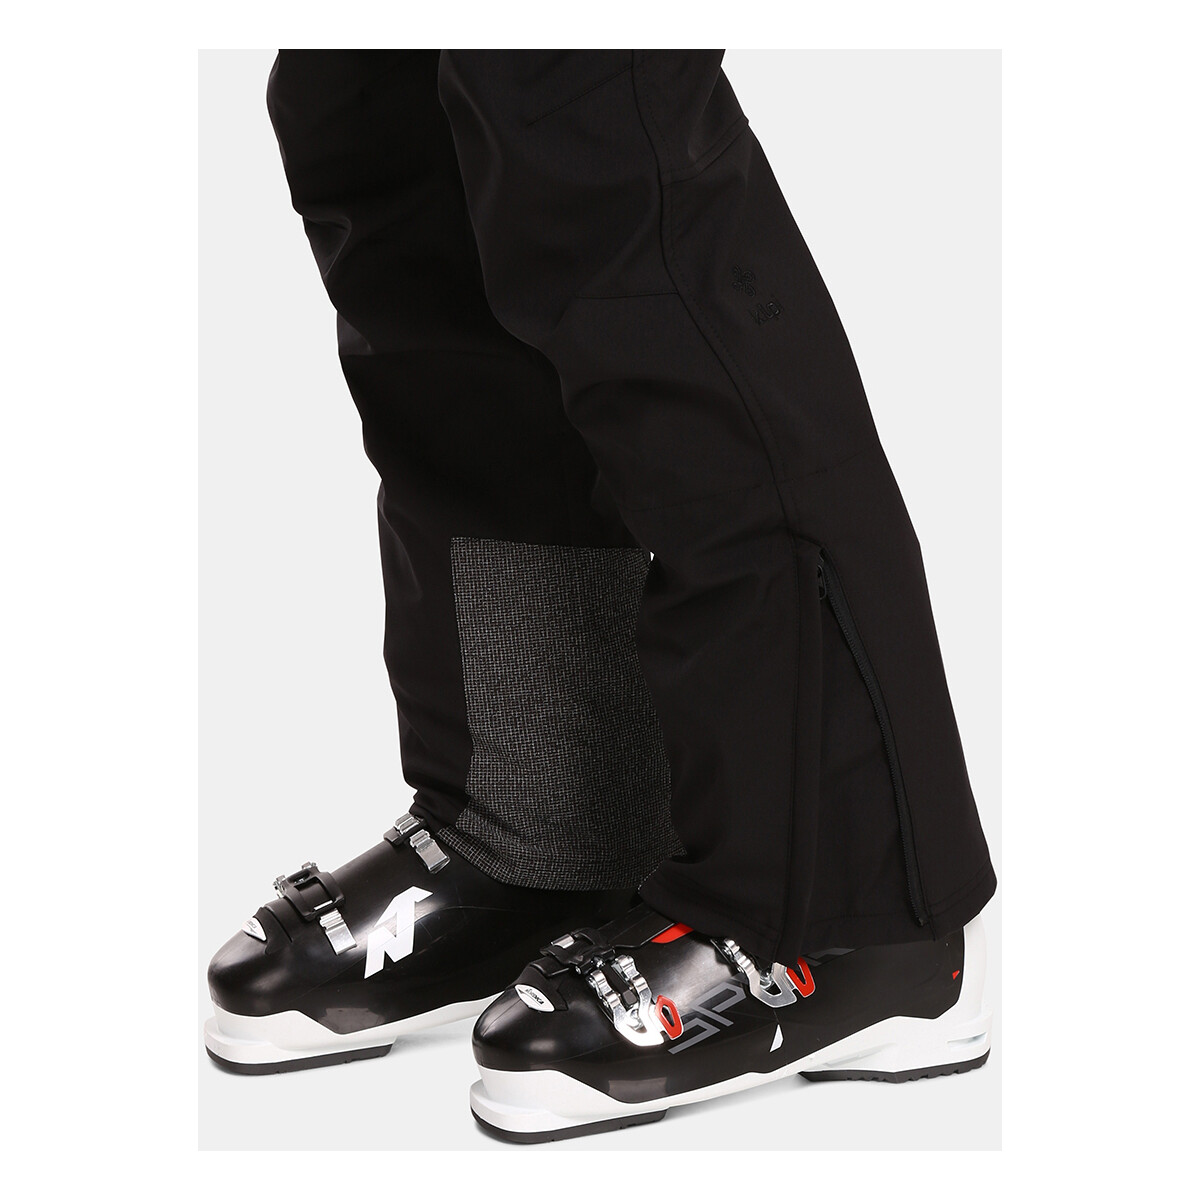 Kilpi Noir Pantalon de ski softshell pour homme RHEA-M M6ww3kS6